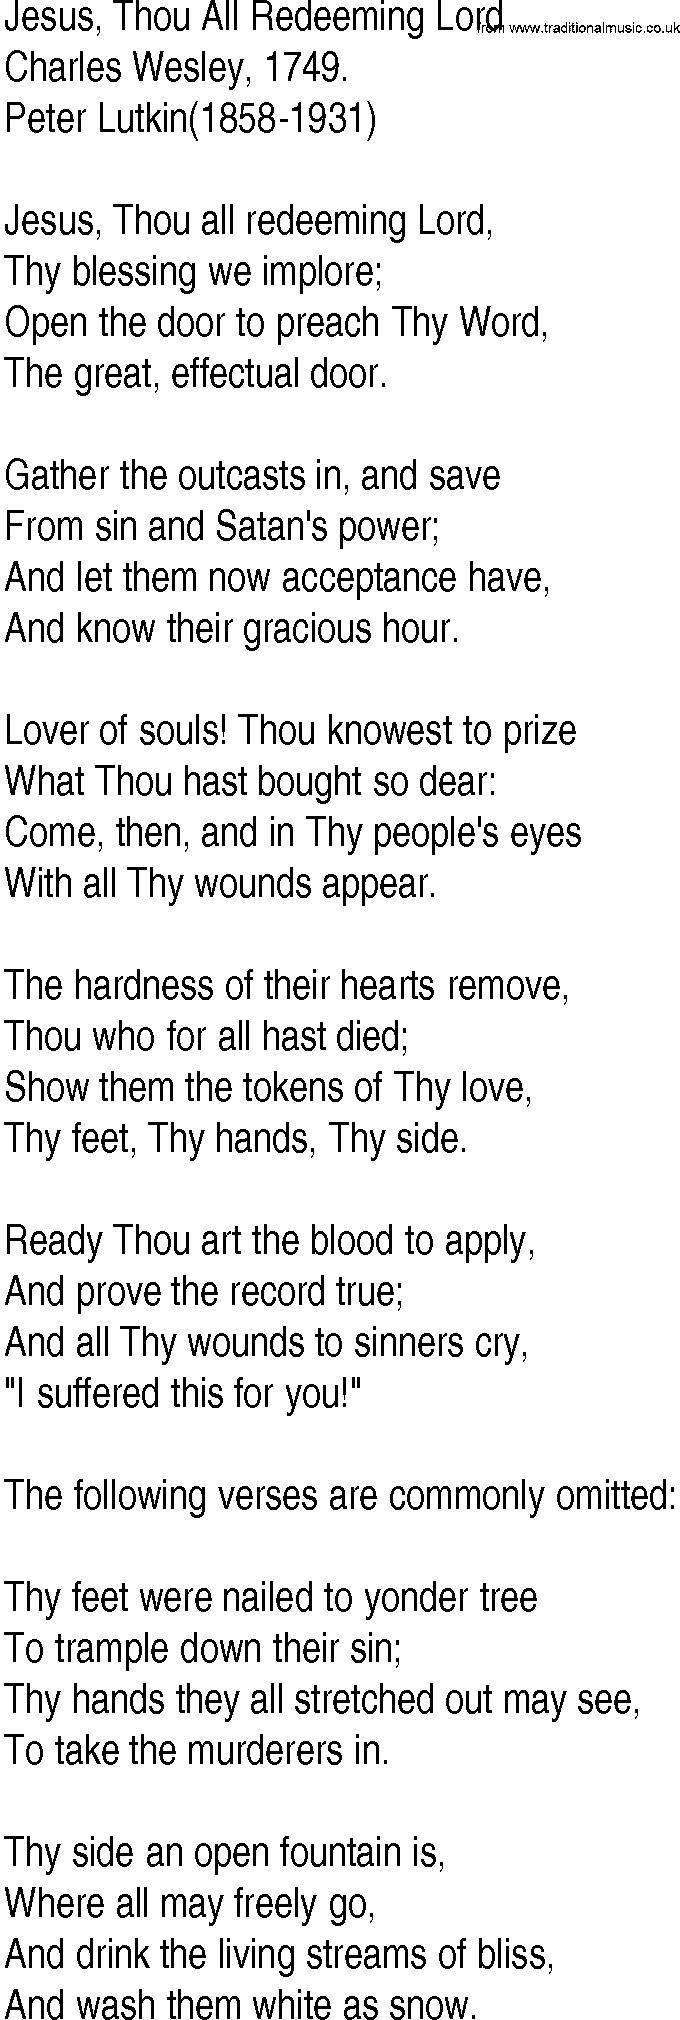 Hymn and Gospel Song: Jesus, Thou All Redeeming Lord by Charles Wesley lyrics